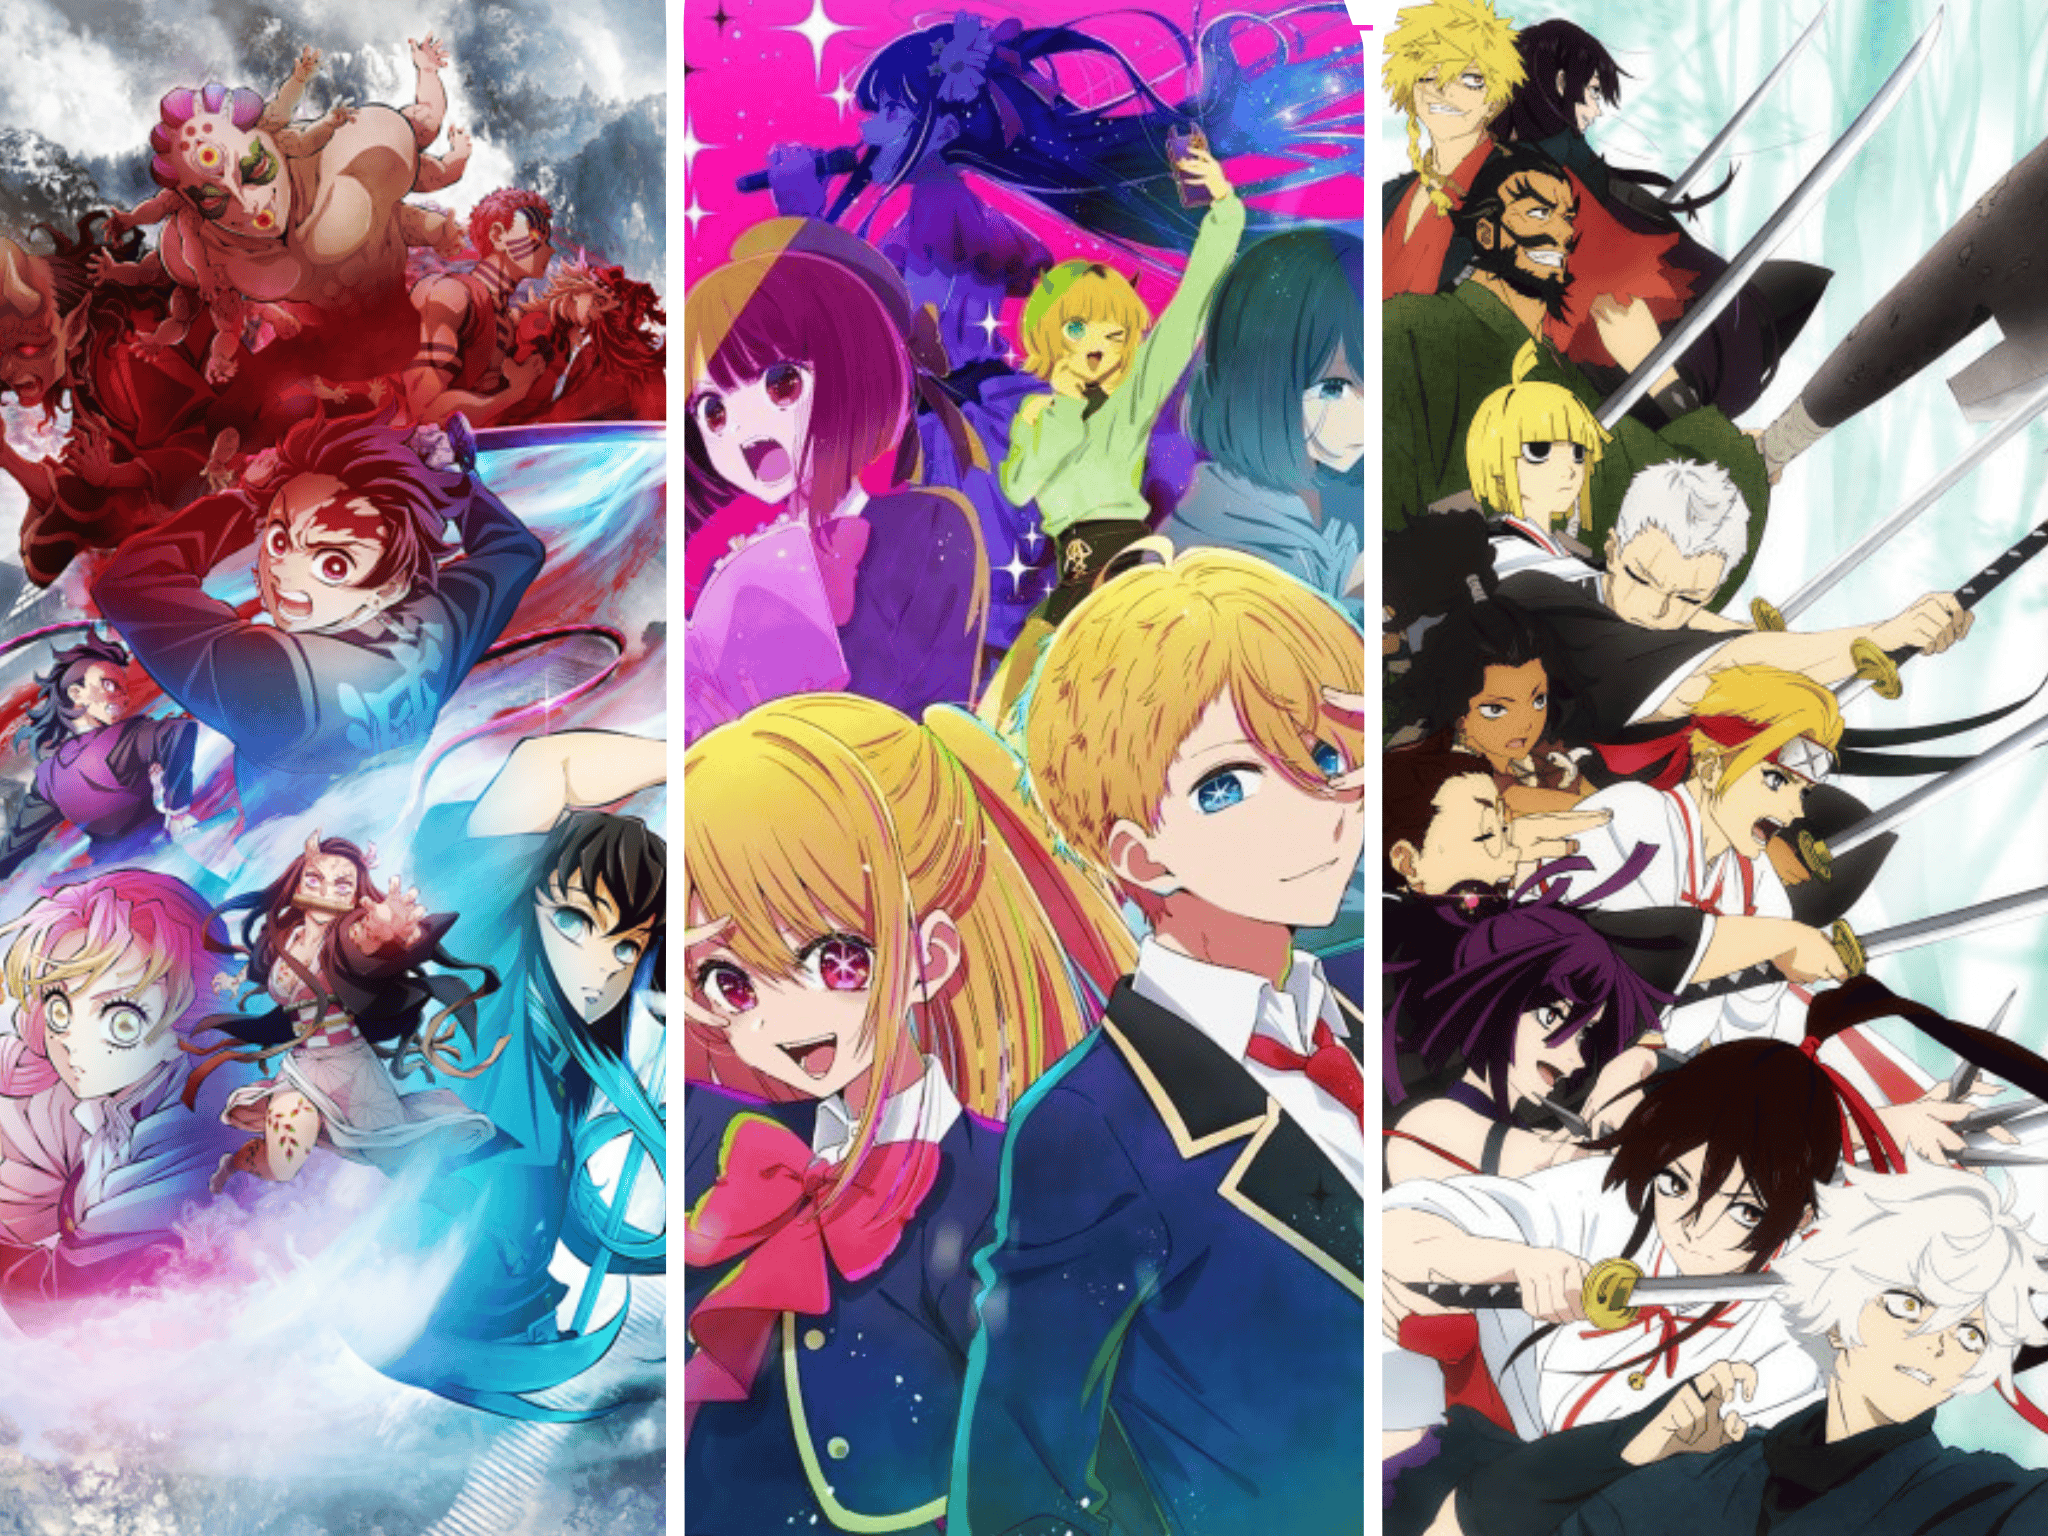 ISEKAI: Top 10 Mejores Series Anime Para Viajar A Otro Mundo